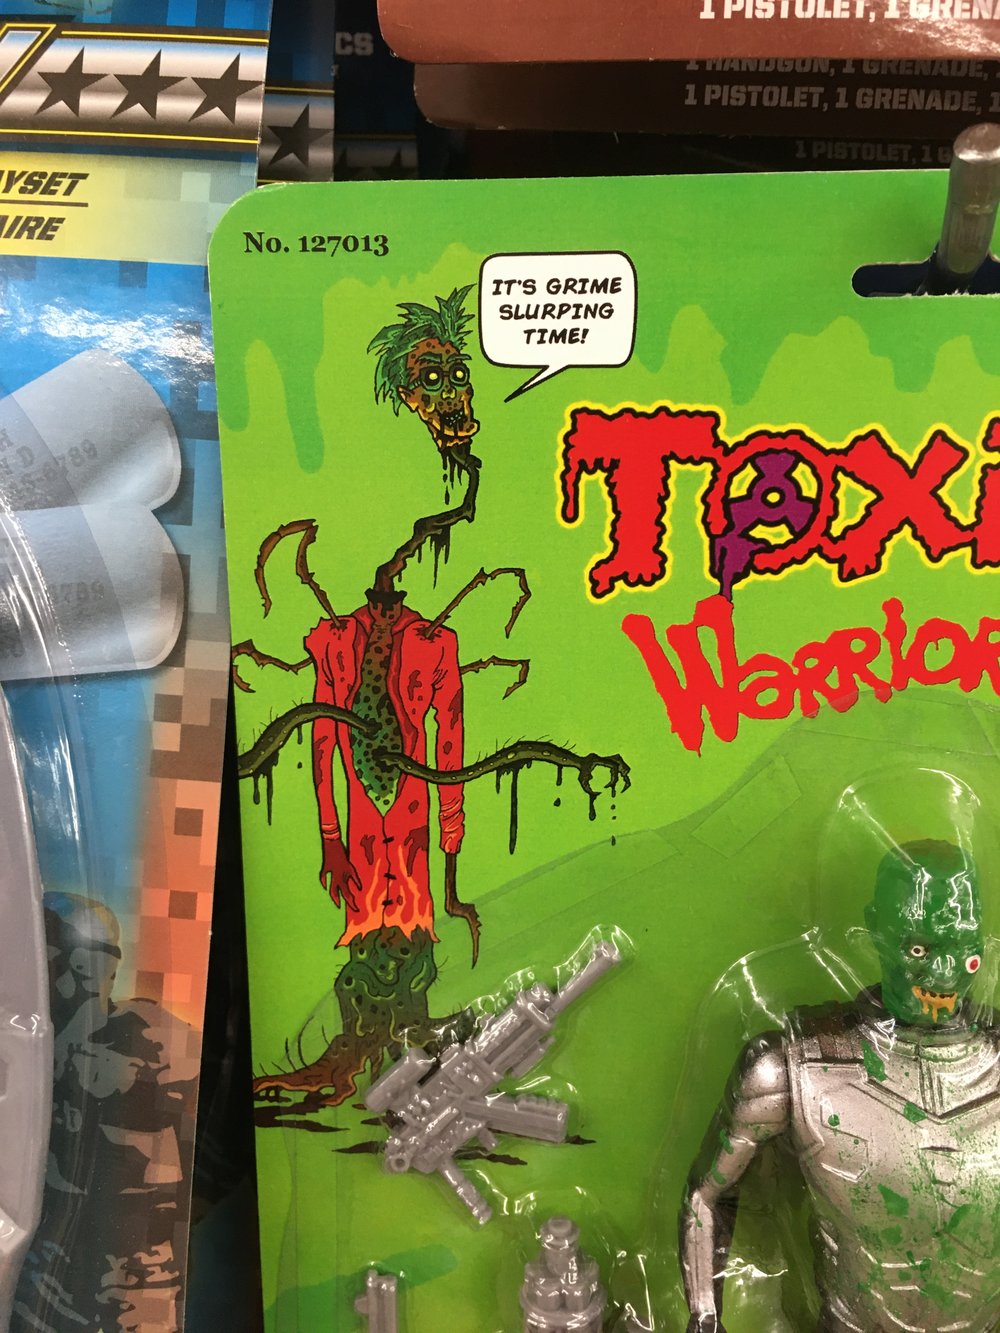 Toxic Warriors